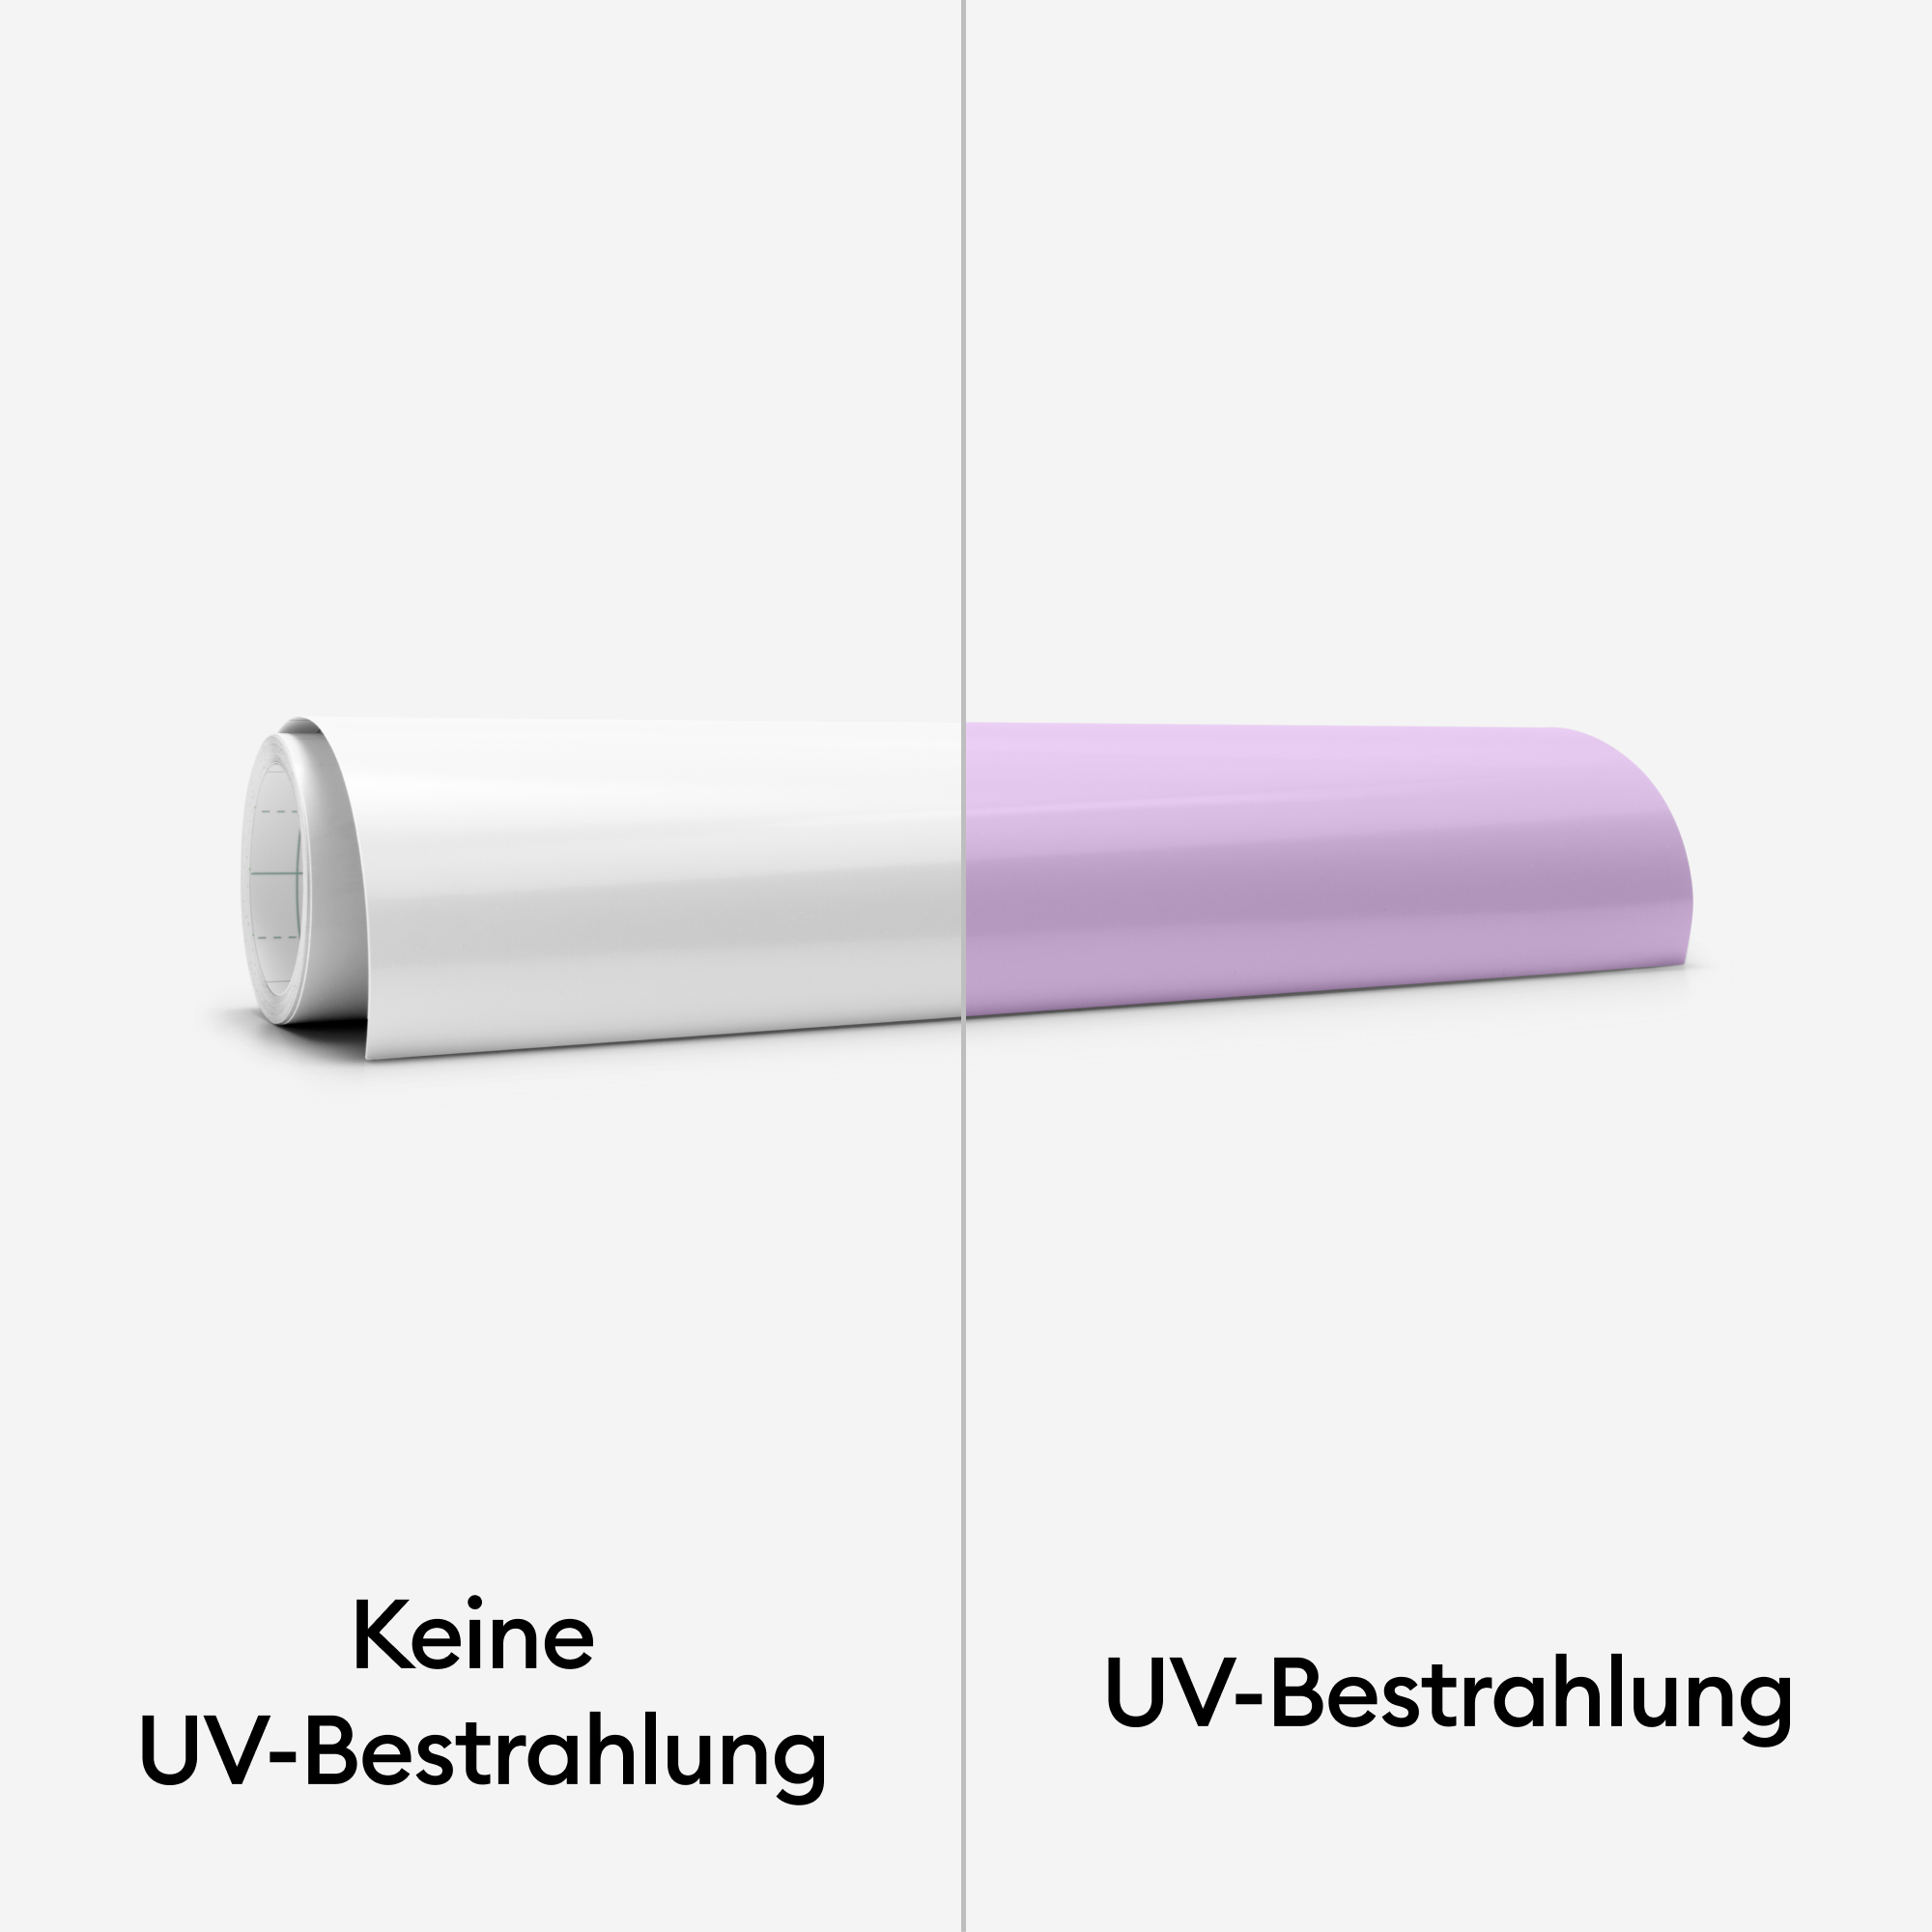 CRICUT Iron-On UV-aktivierte Bügelfolie Violet